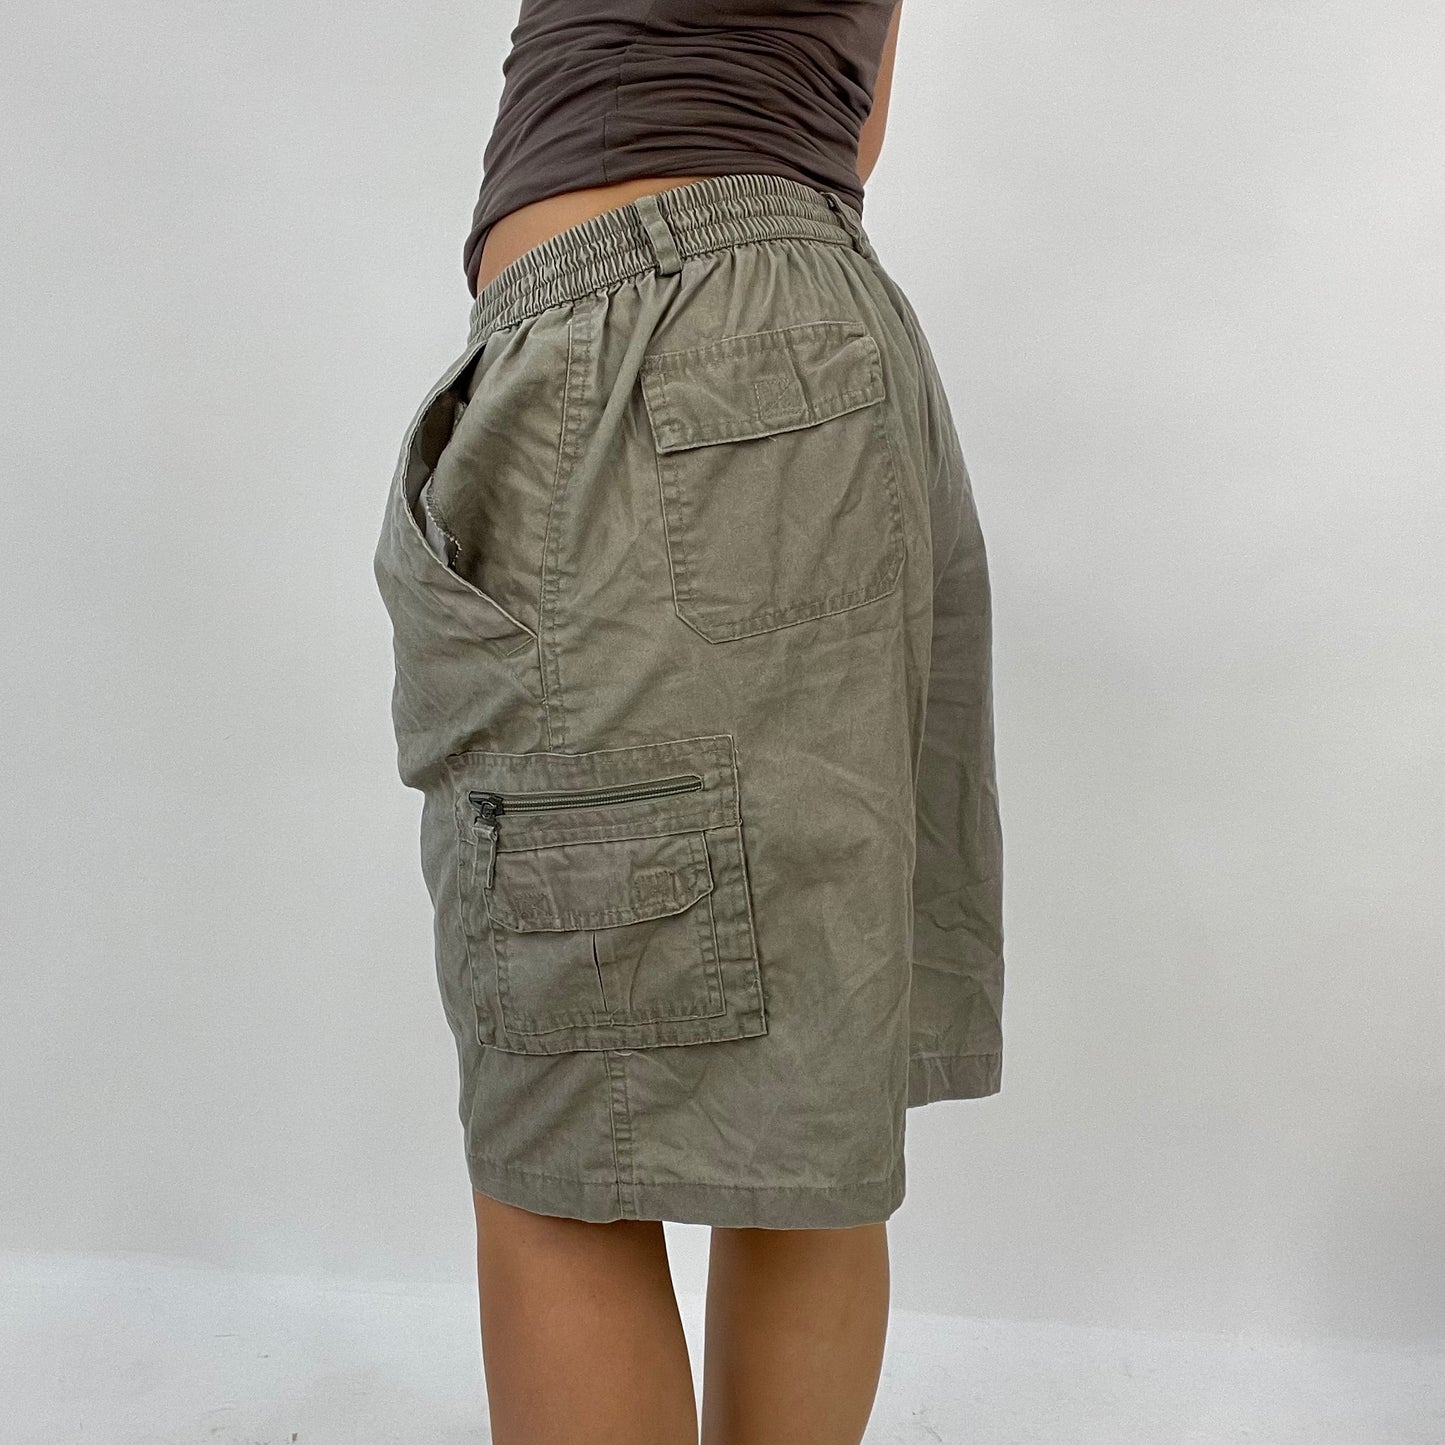 BLOKECORE DROP | khaki oversized shorts - s/m